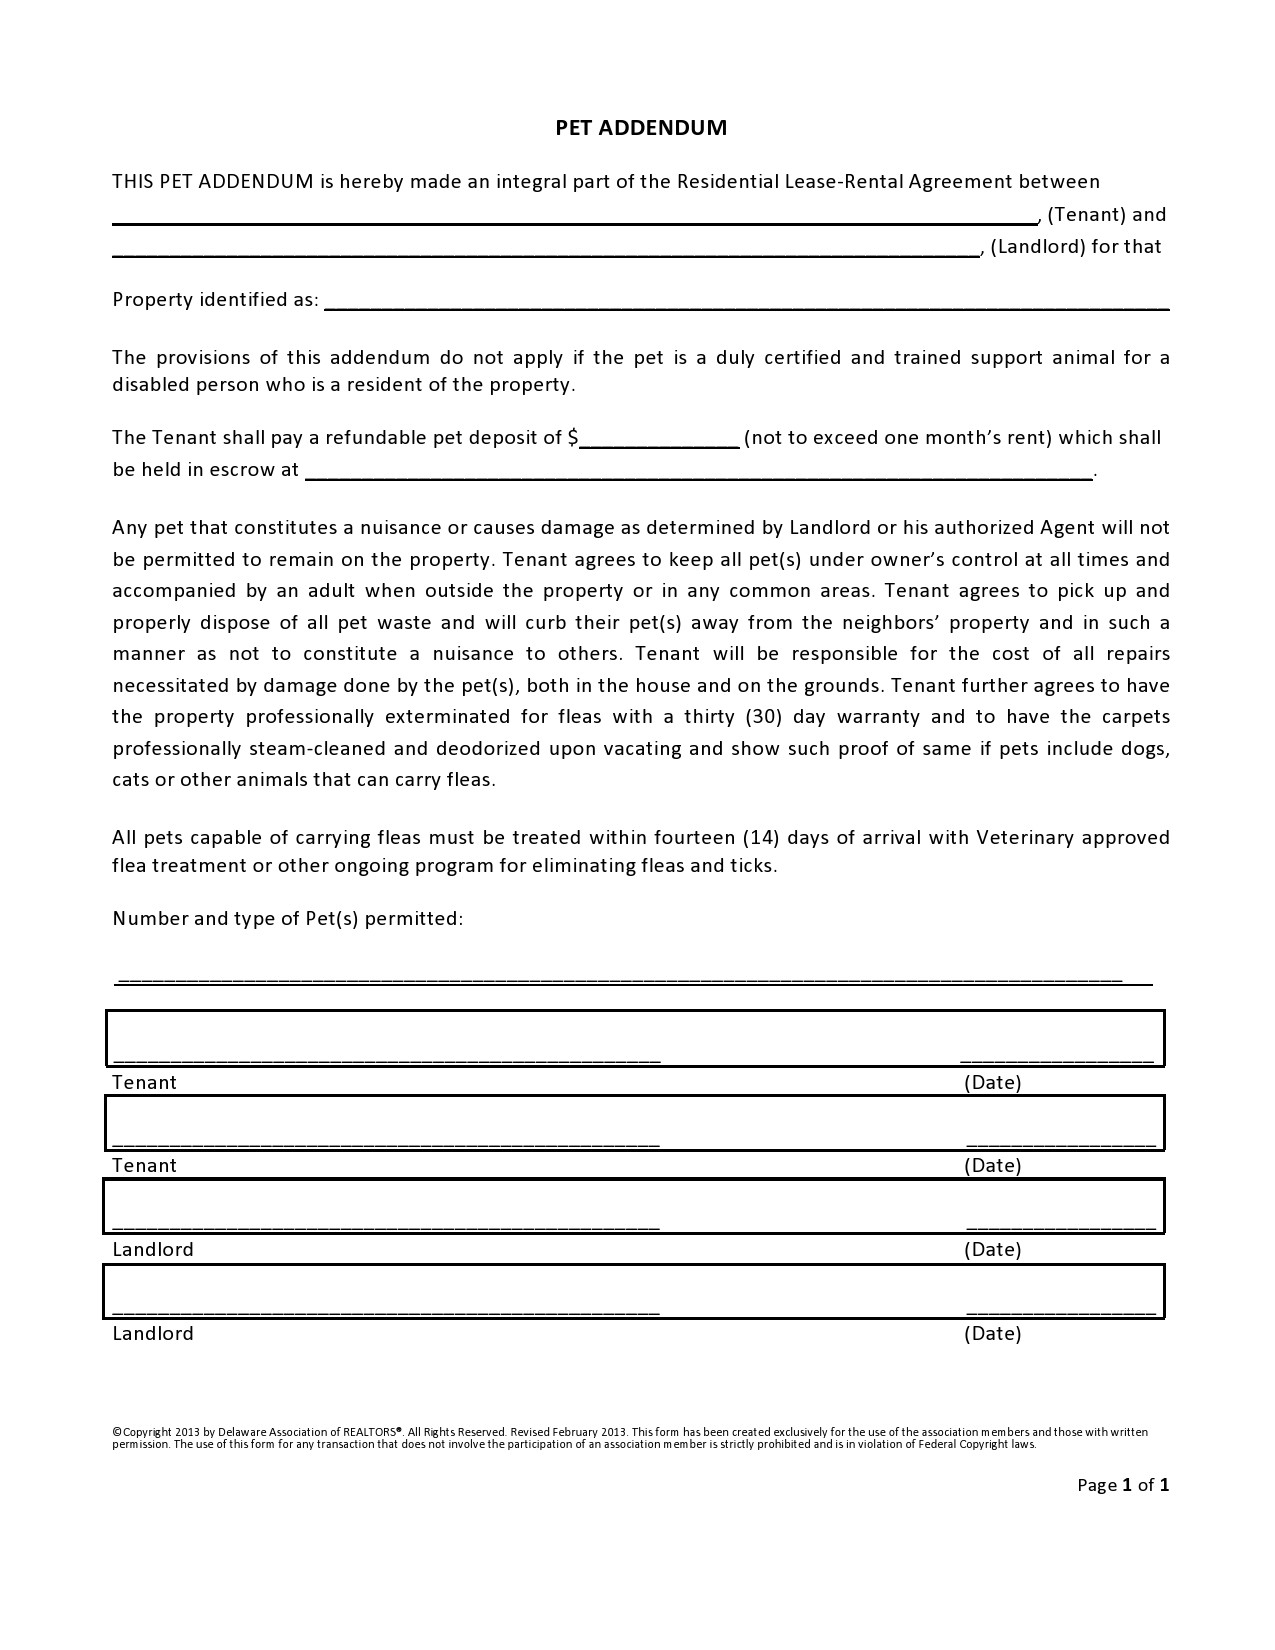 39 Free Pet Addendum Forms to Rental Agreement [DOC, PDF]